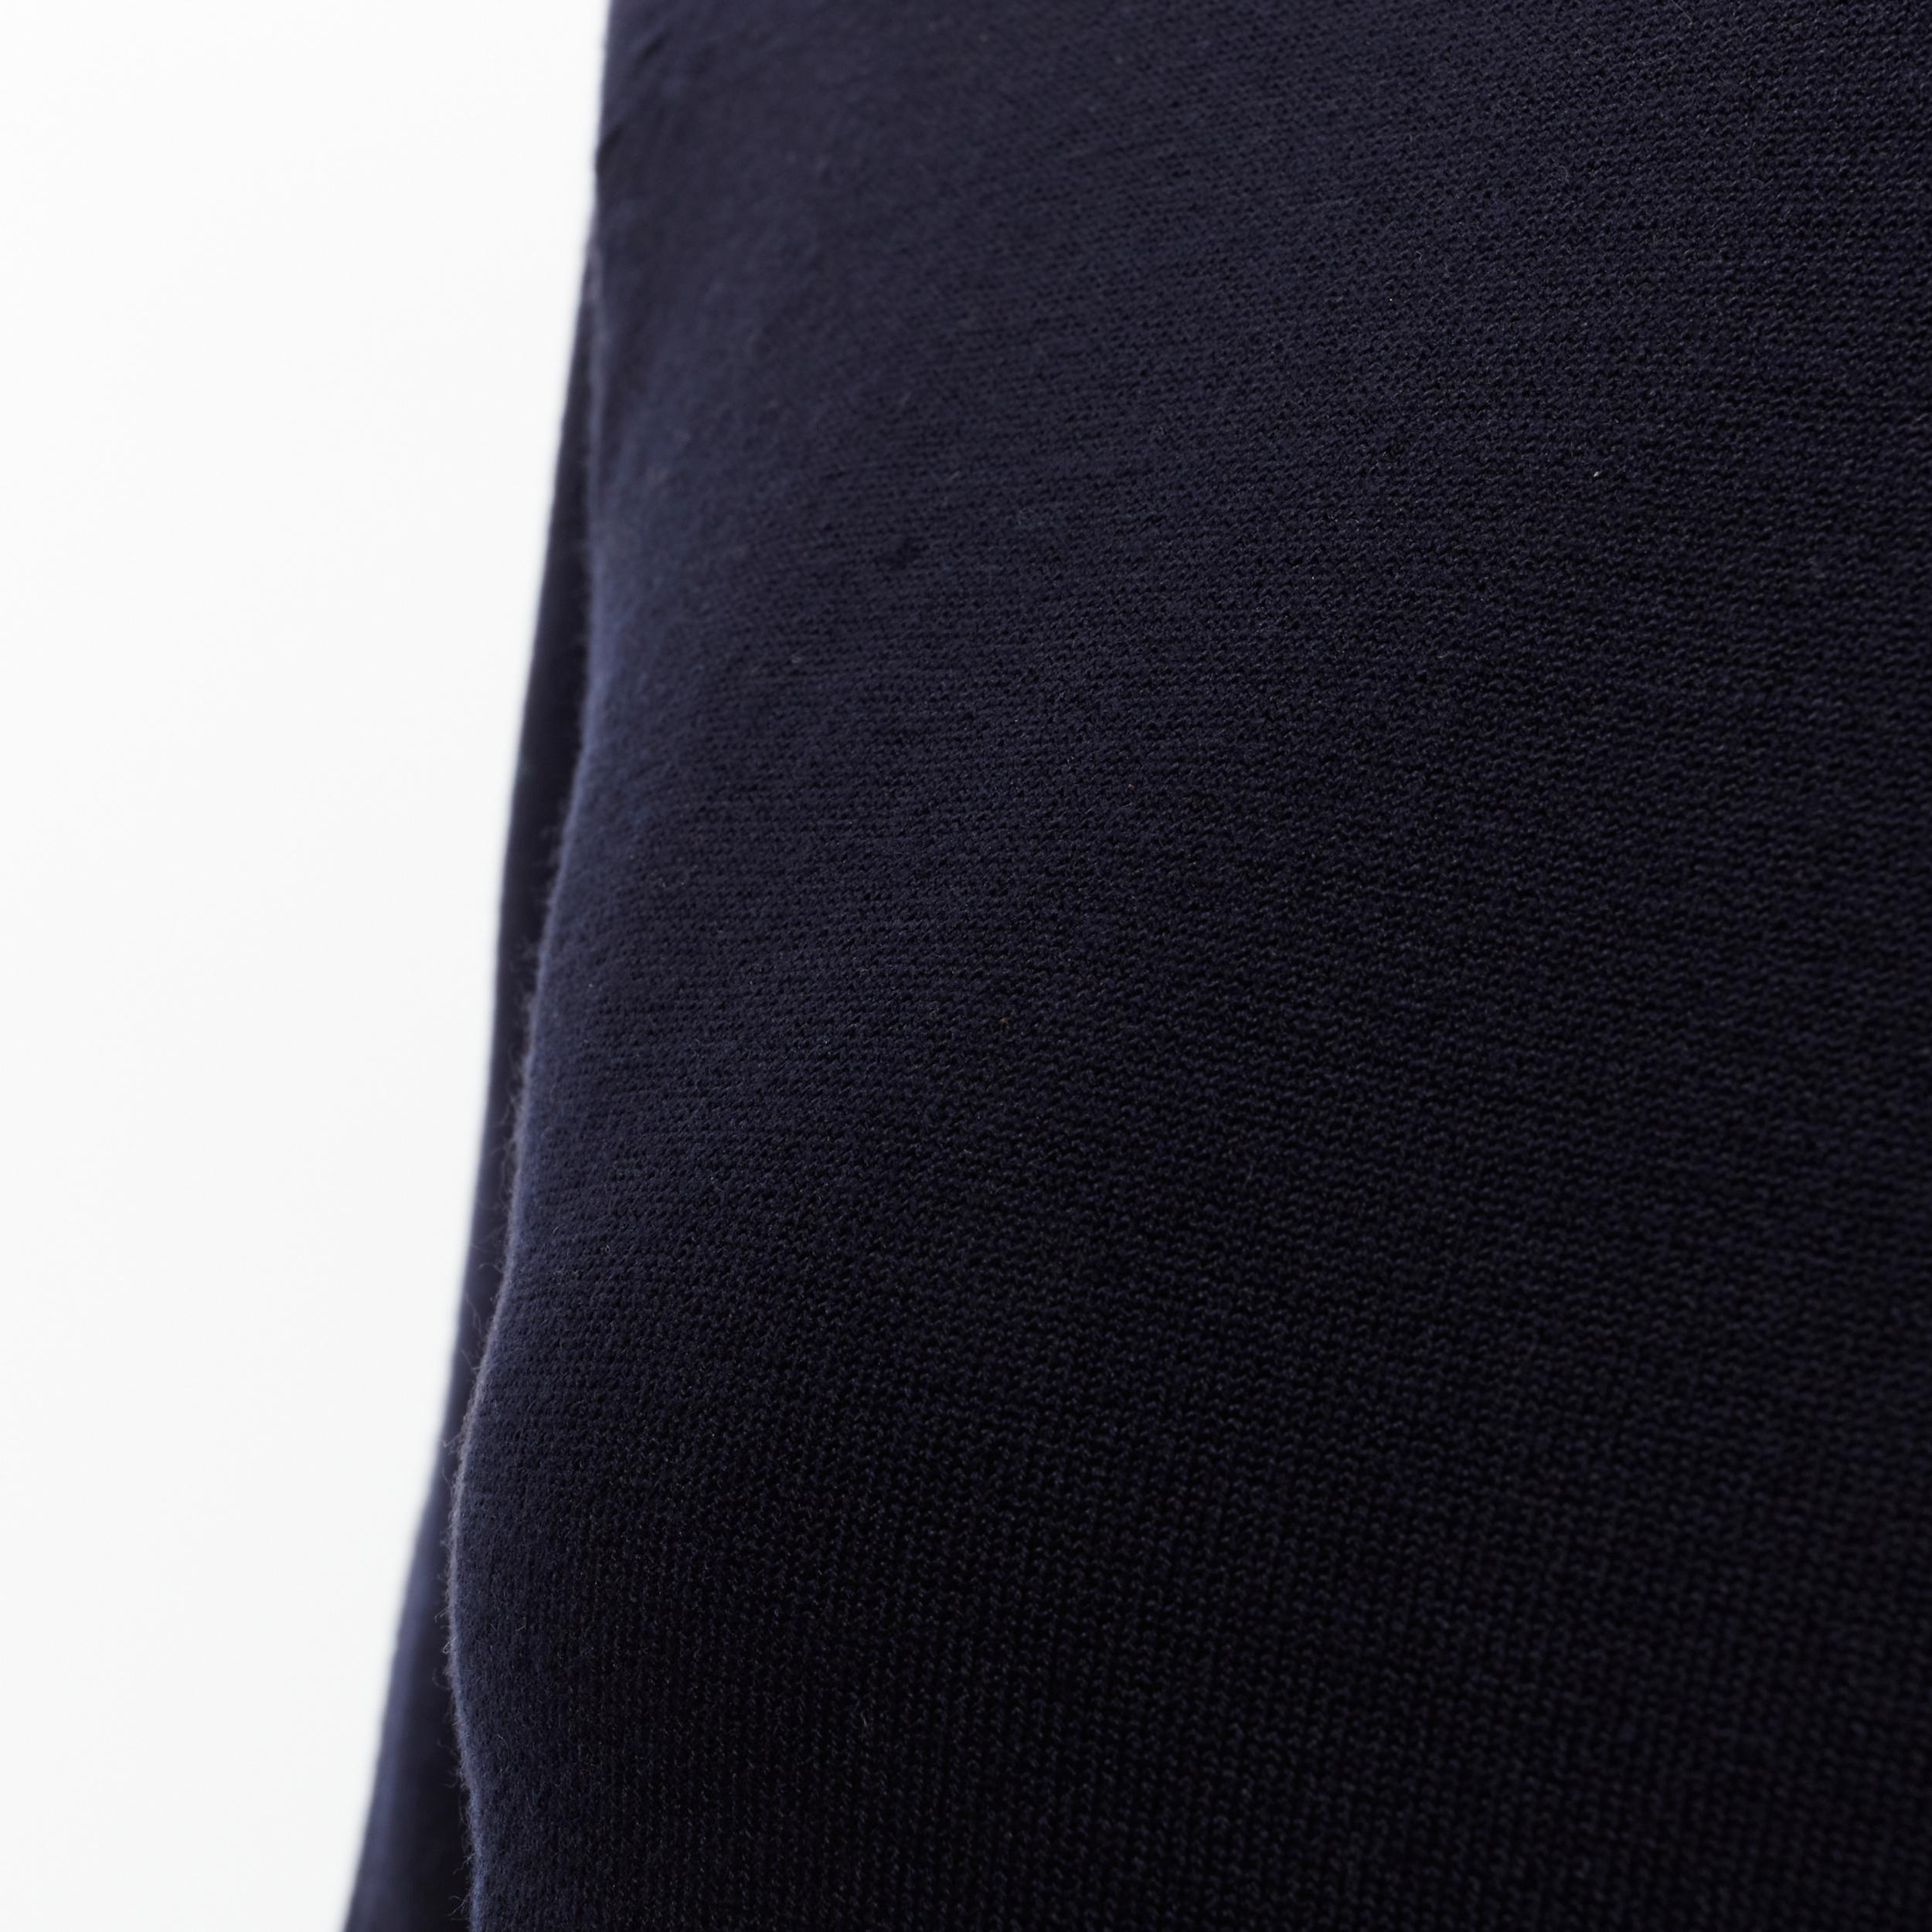 KORS MICHAEL KORS navy blue silk nylon knit long sleeve turtleneck sweater S For Sale 4